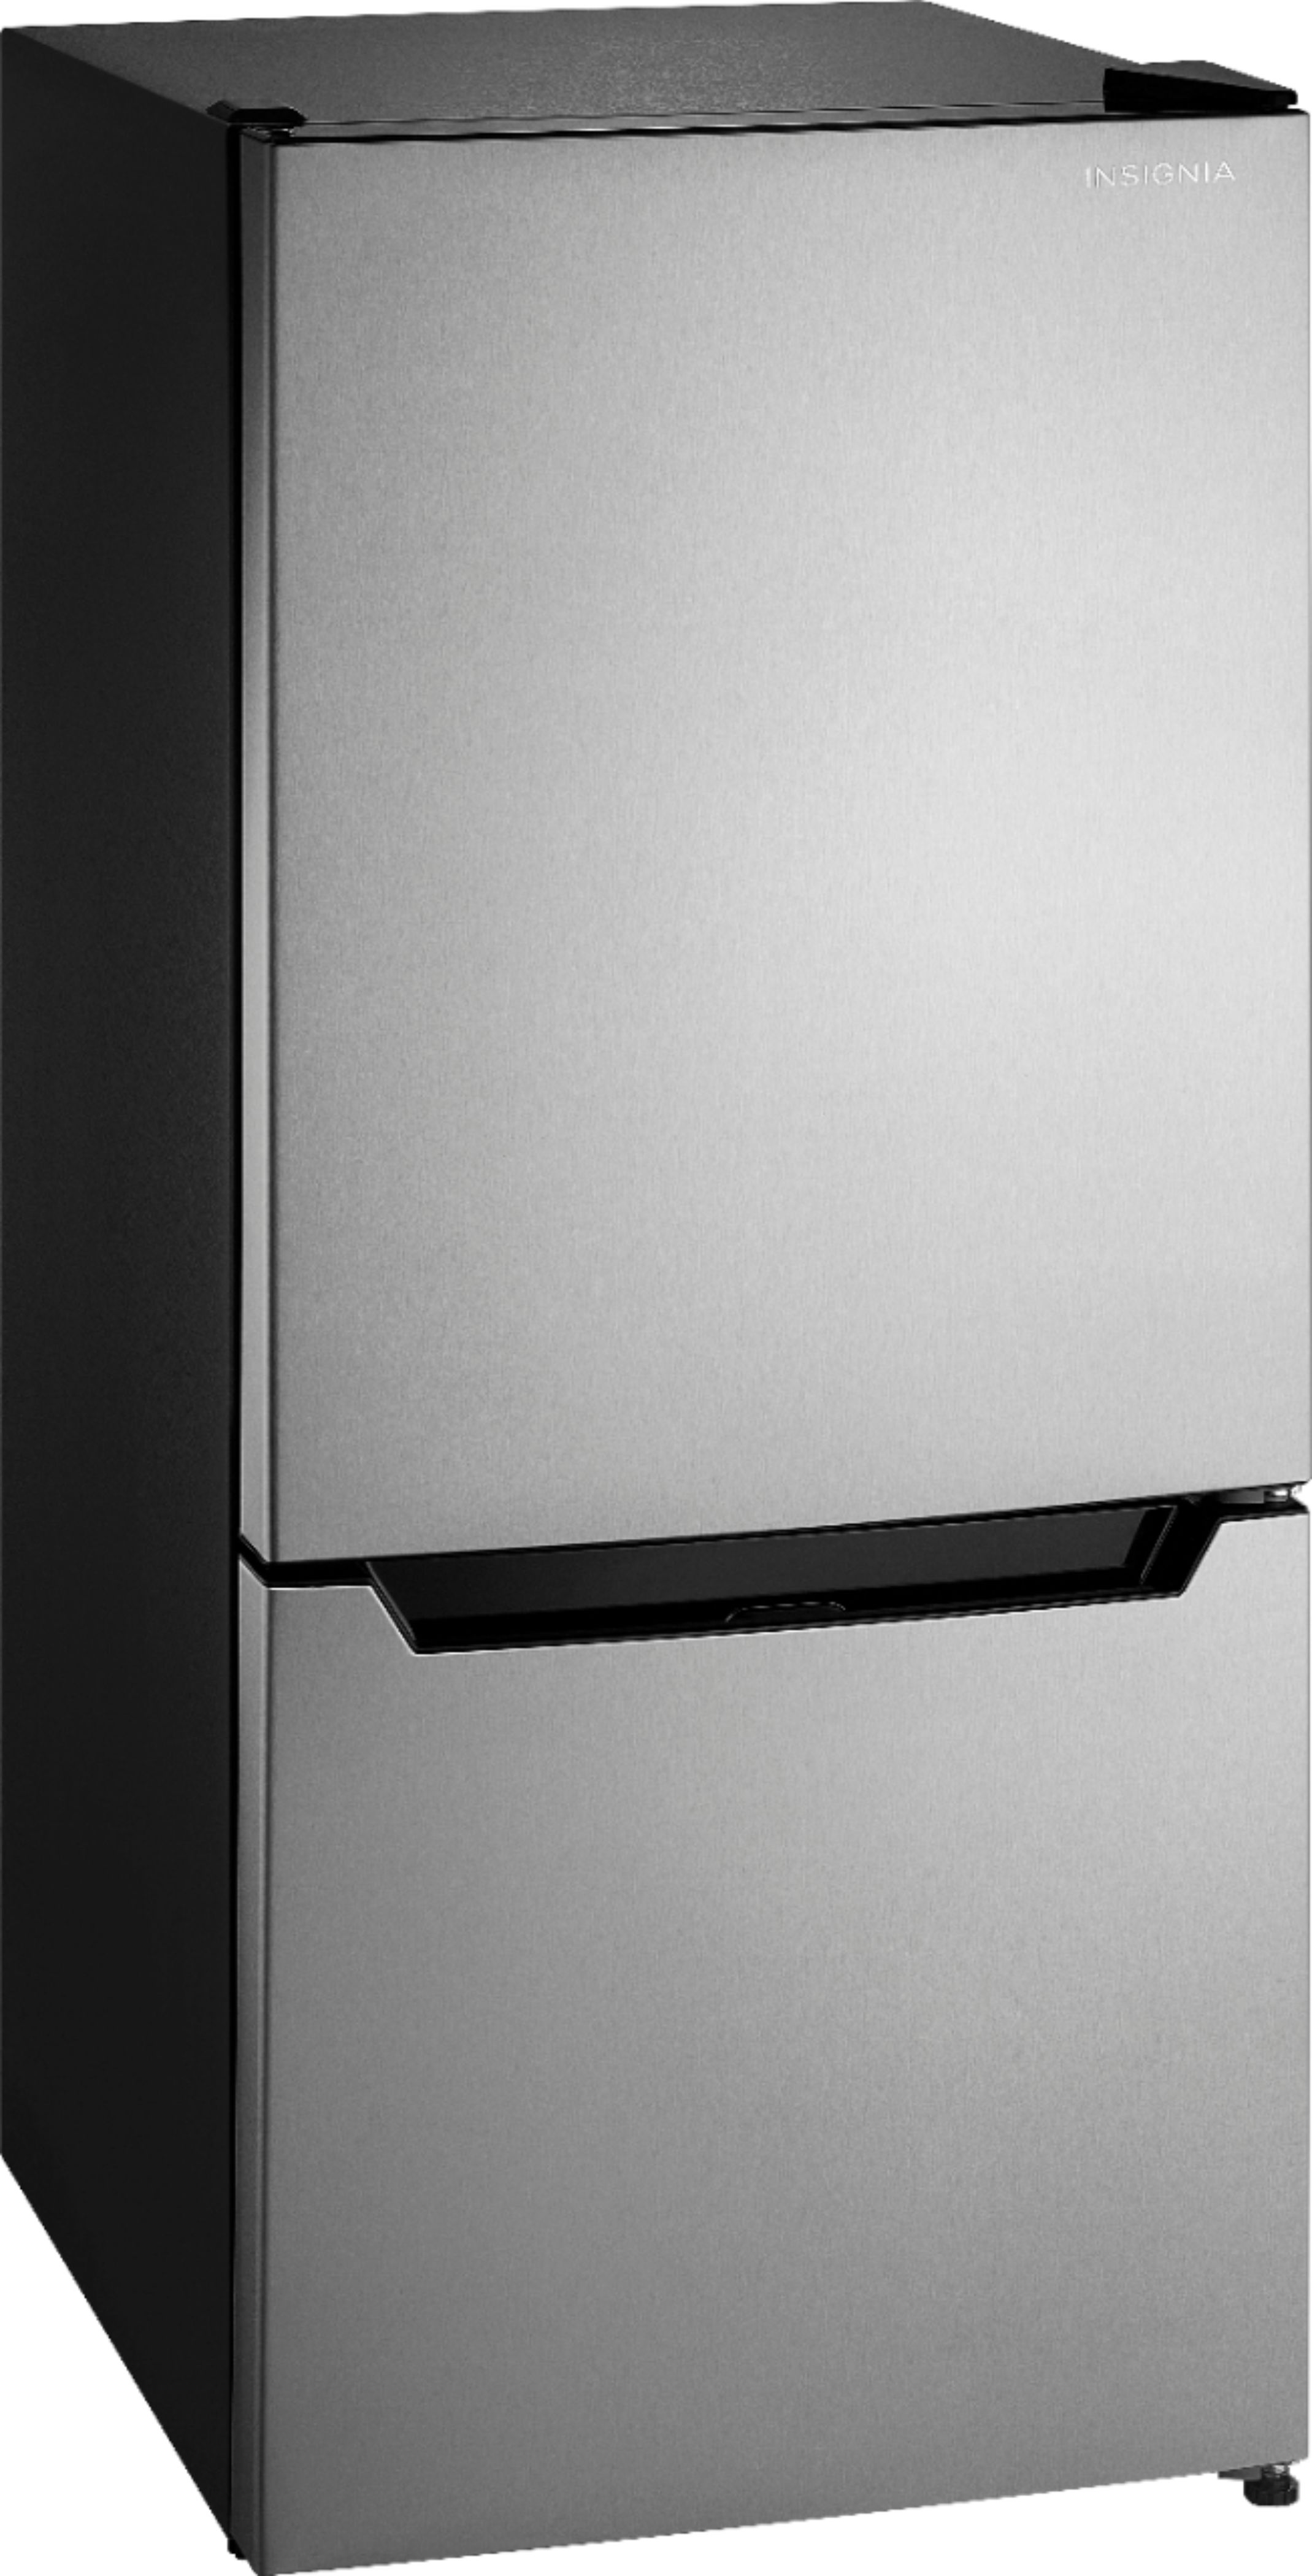 26++ Insignia compact fridge reviews info